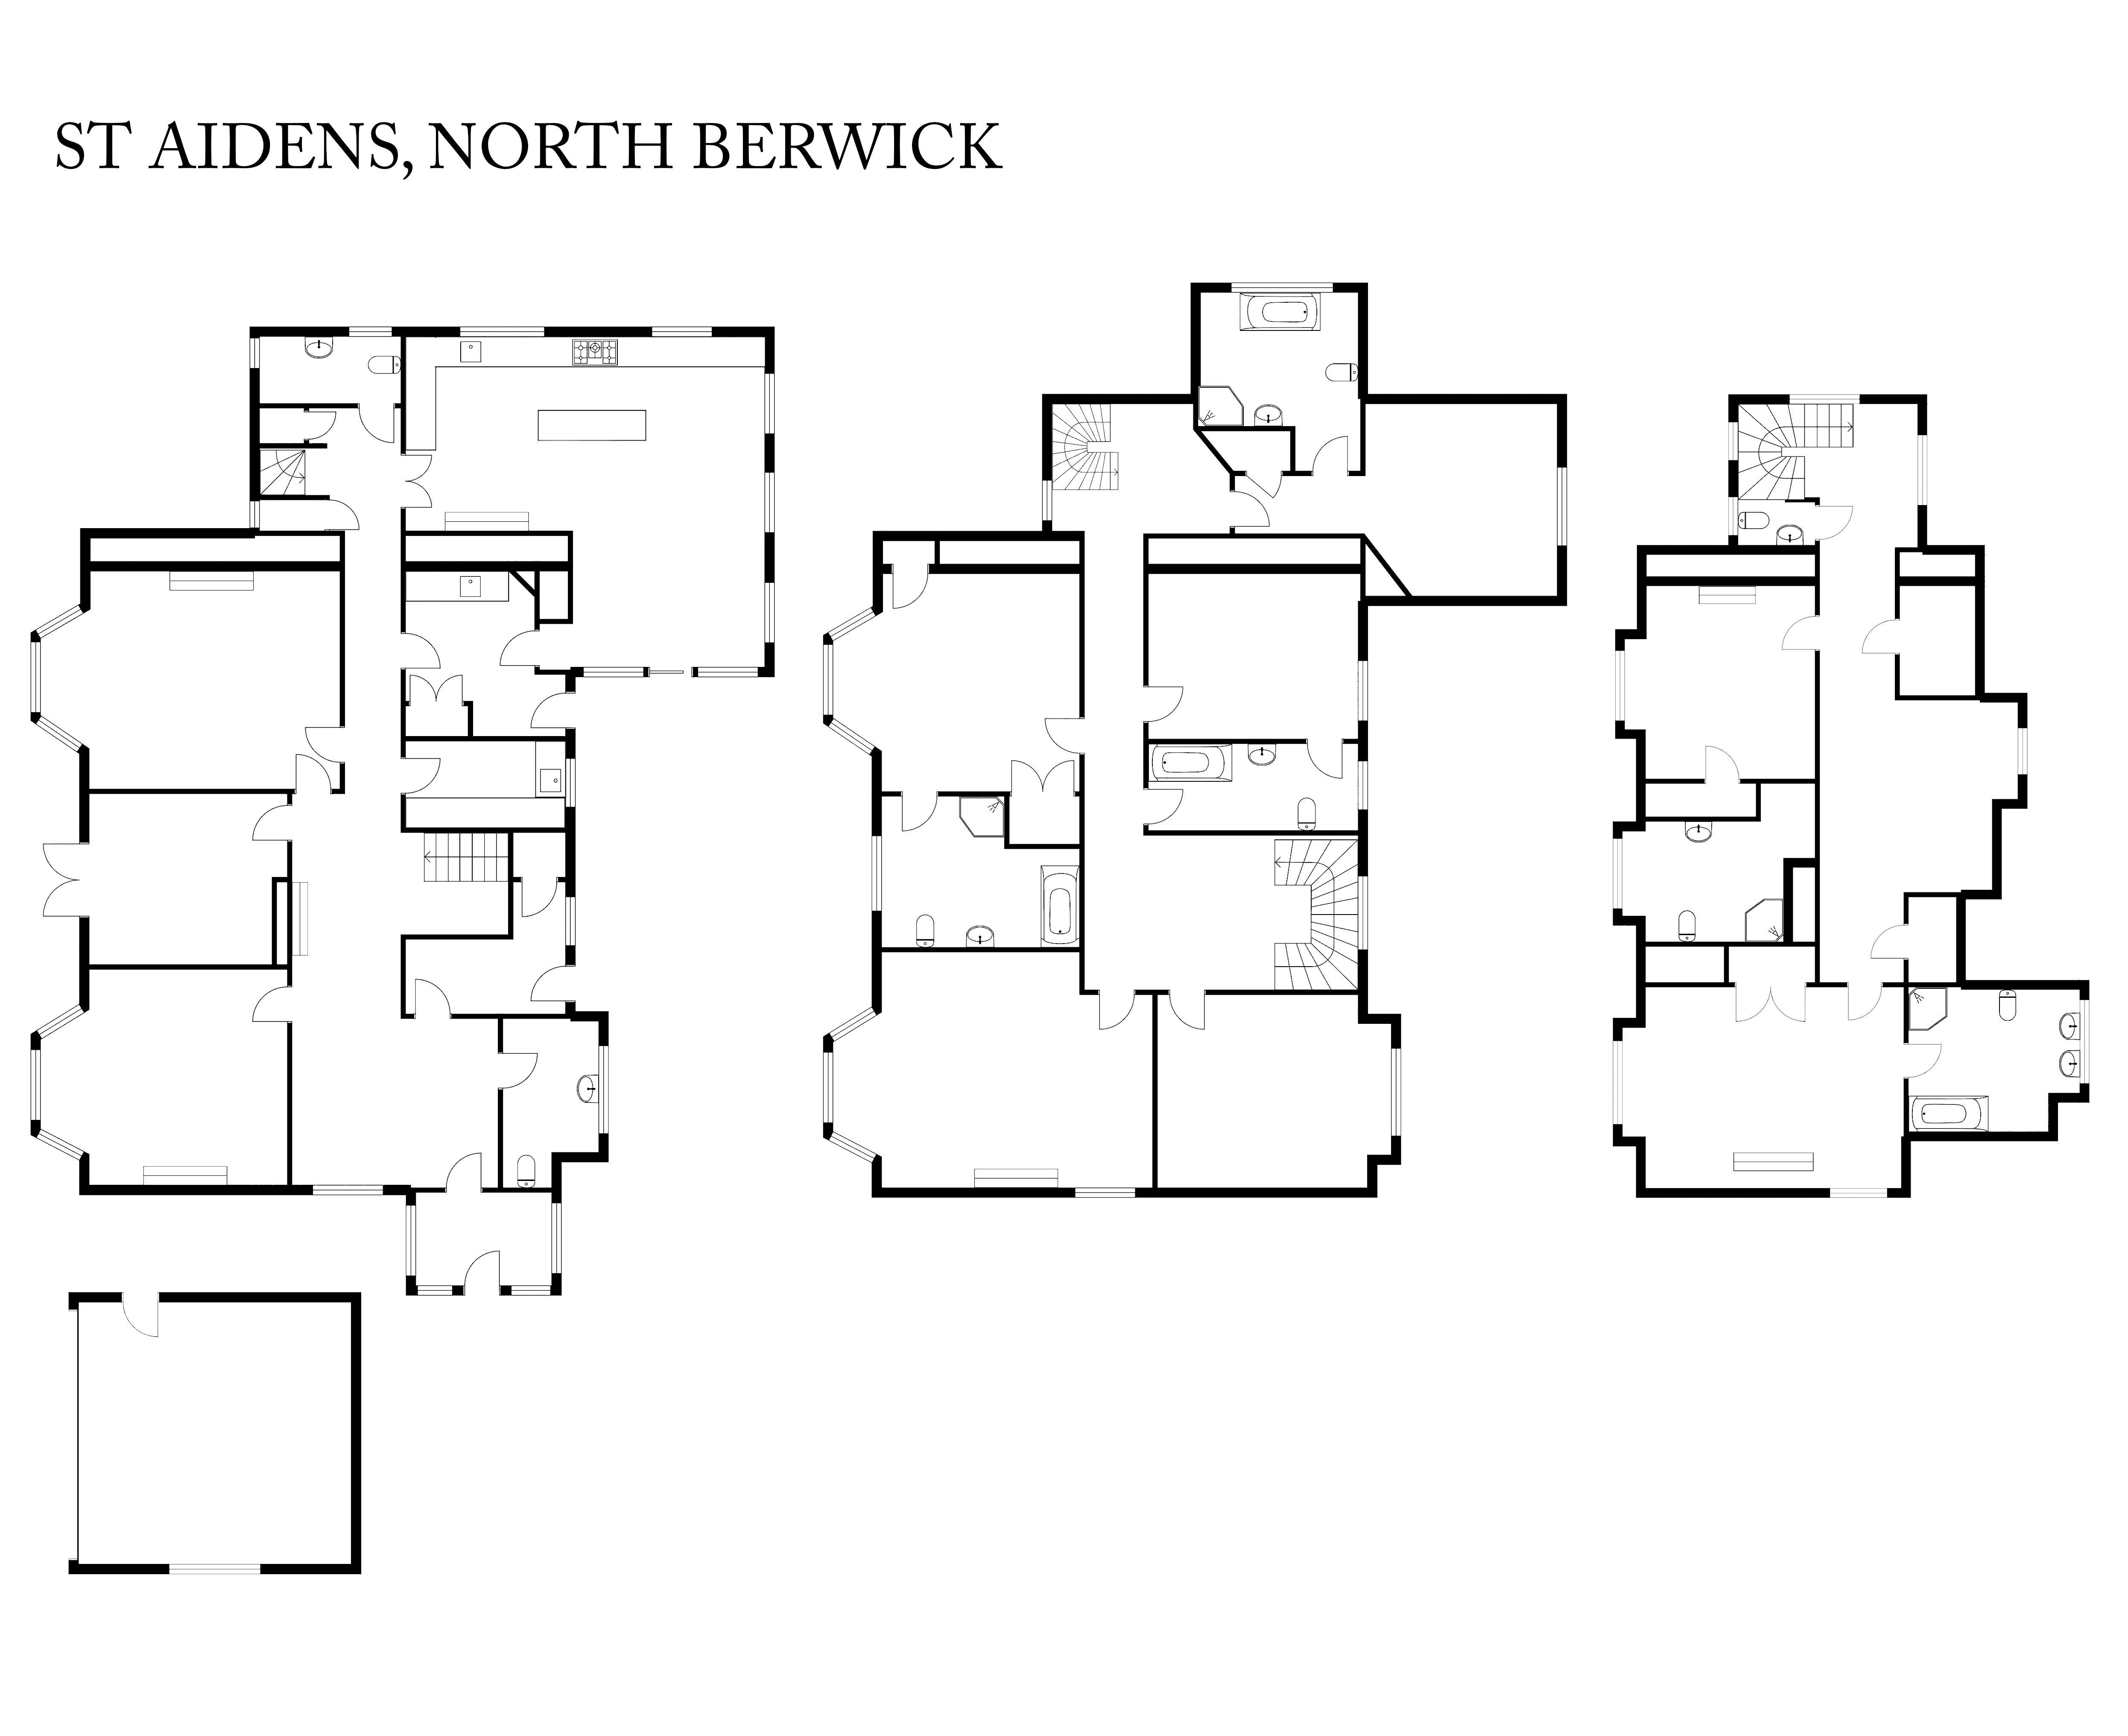 Floorplan - Floorplan of St Aidans, a large luxury holiday home in North Berwick